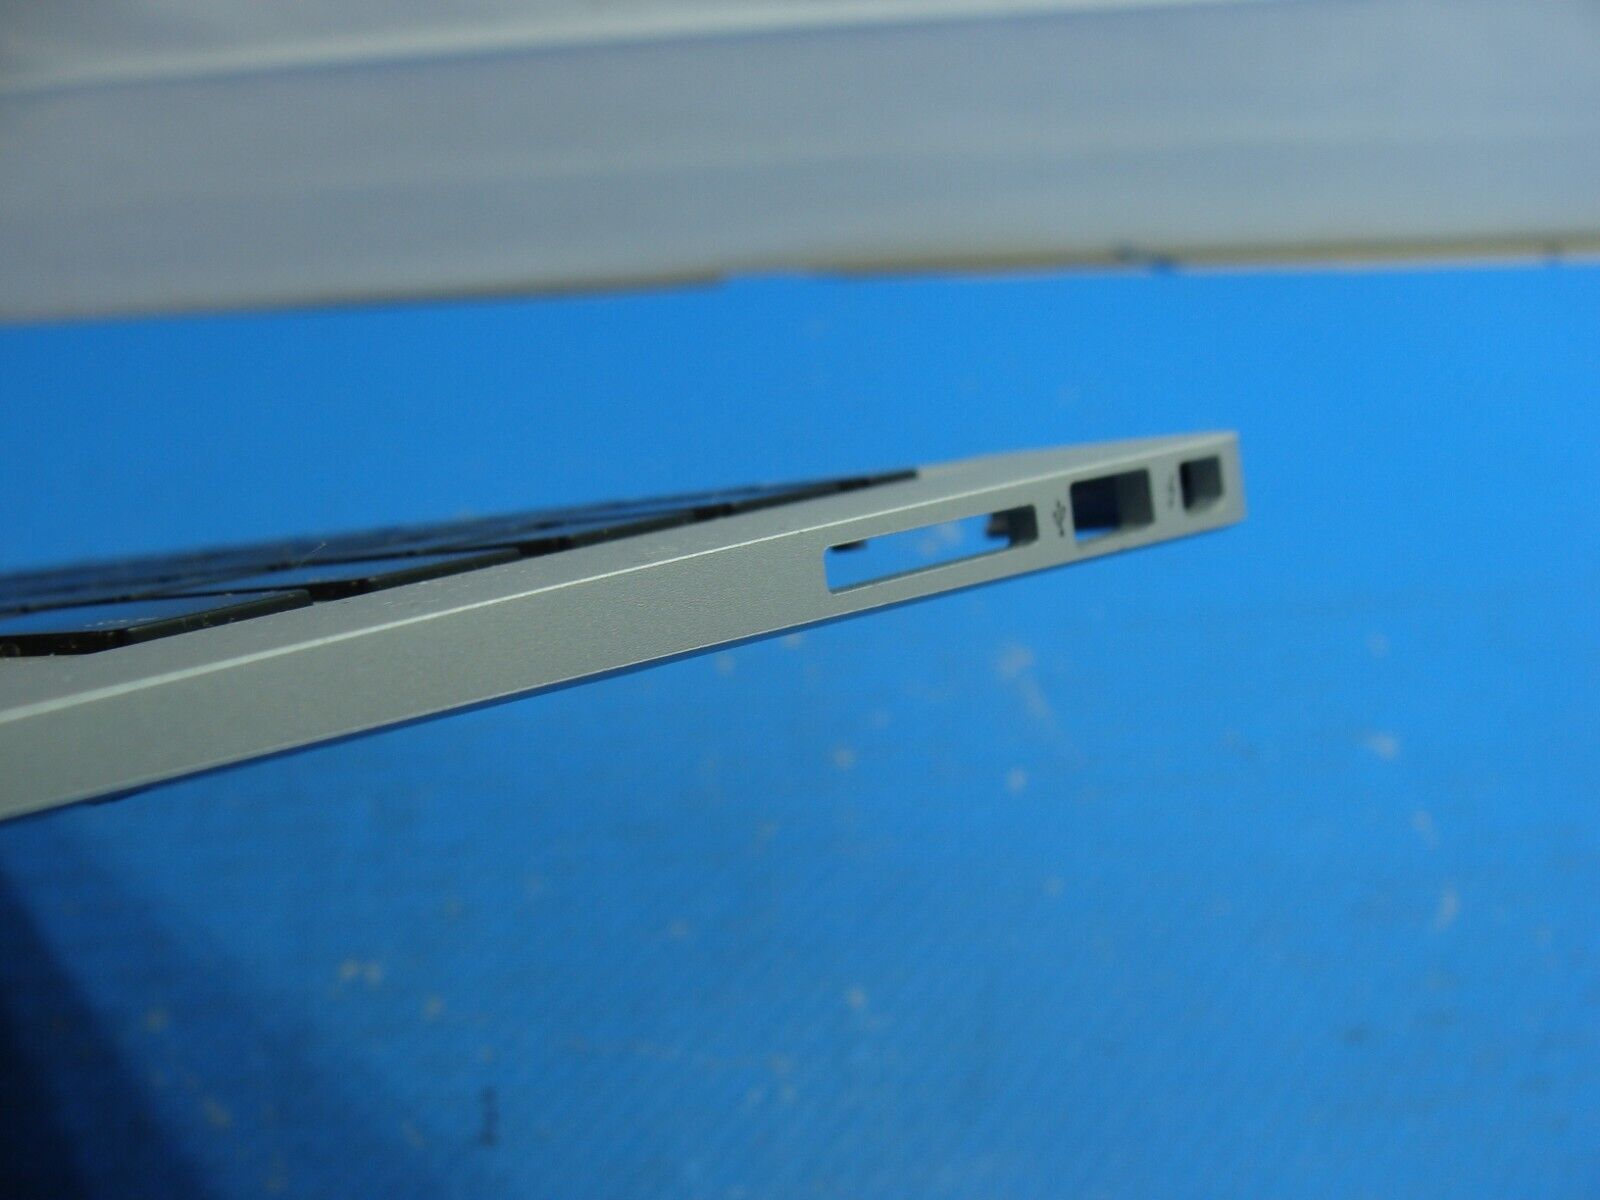 MacBook Air A1466 13 2015 MJVE2LL/A Top Case w/Trackpad Keyboard 661-7480